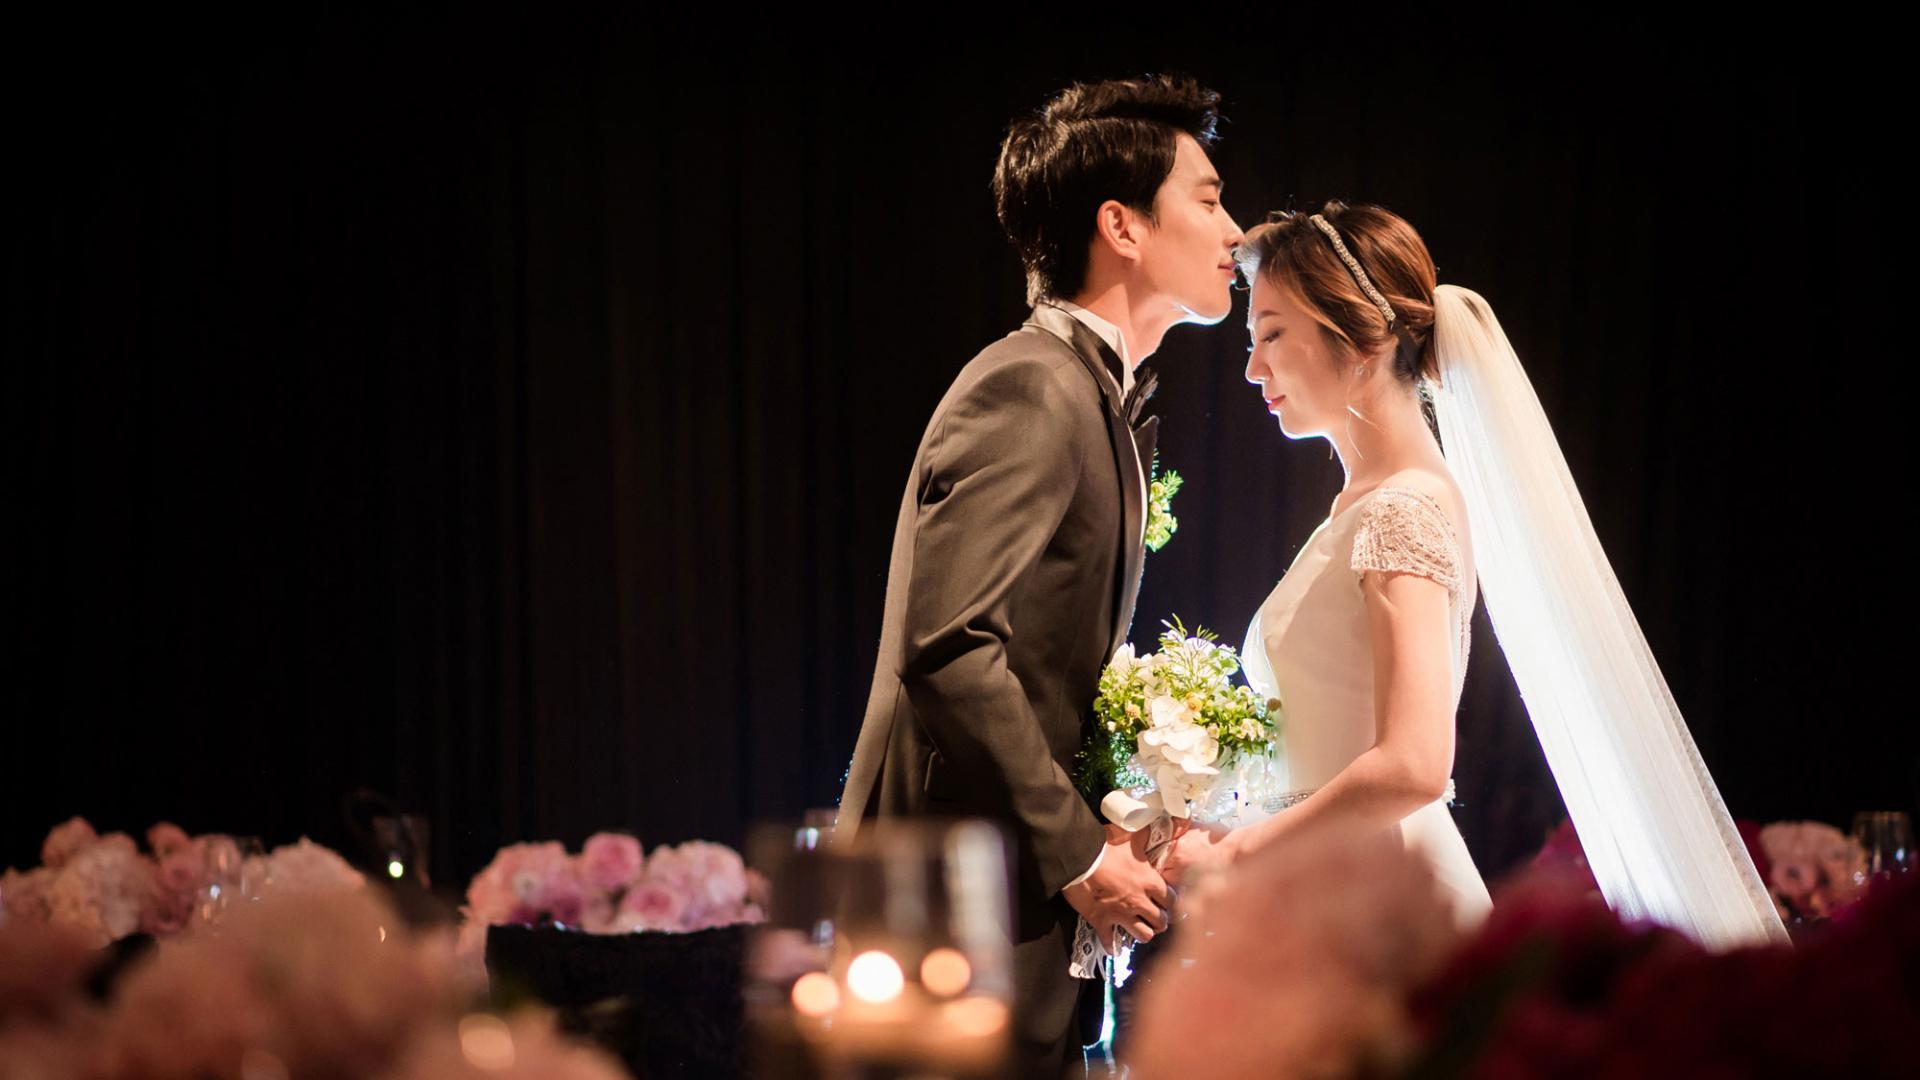 Lotte Hotel Seoul-Wedding&Conference-Wedding-Emerald Room